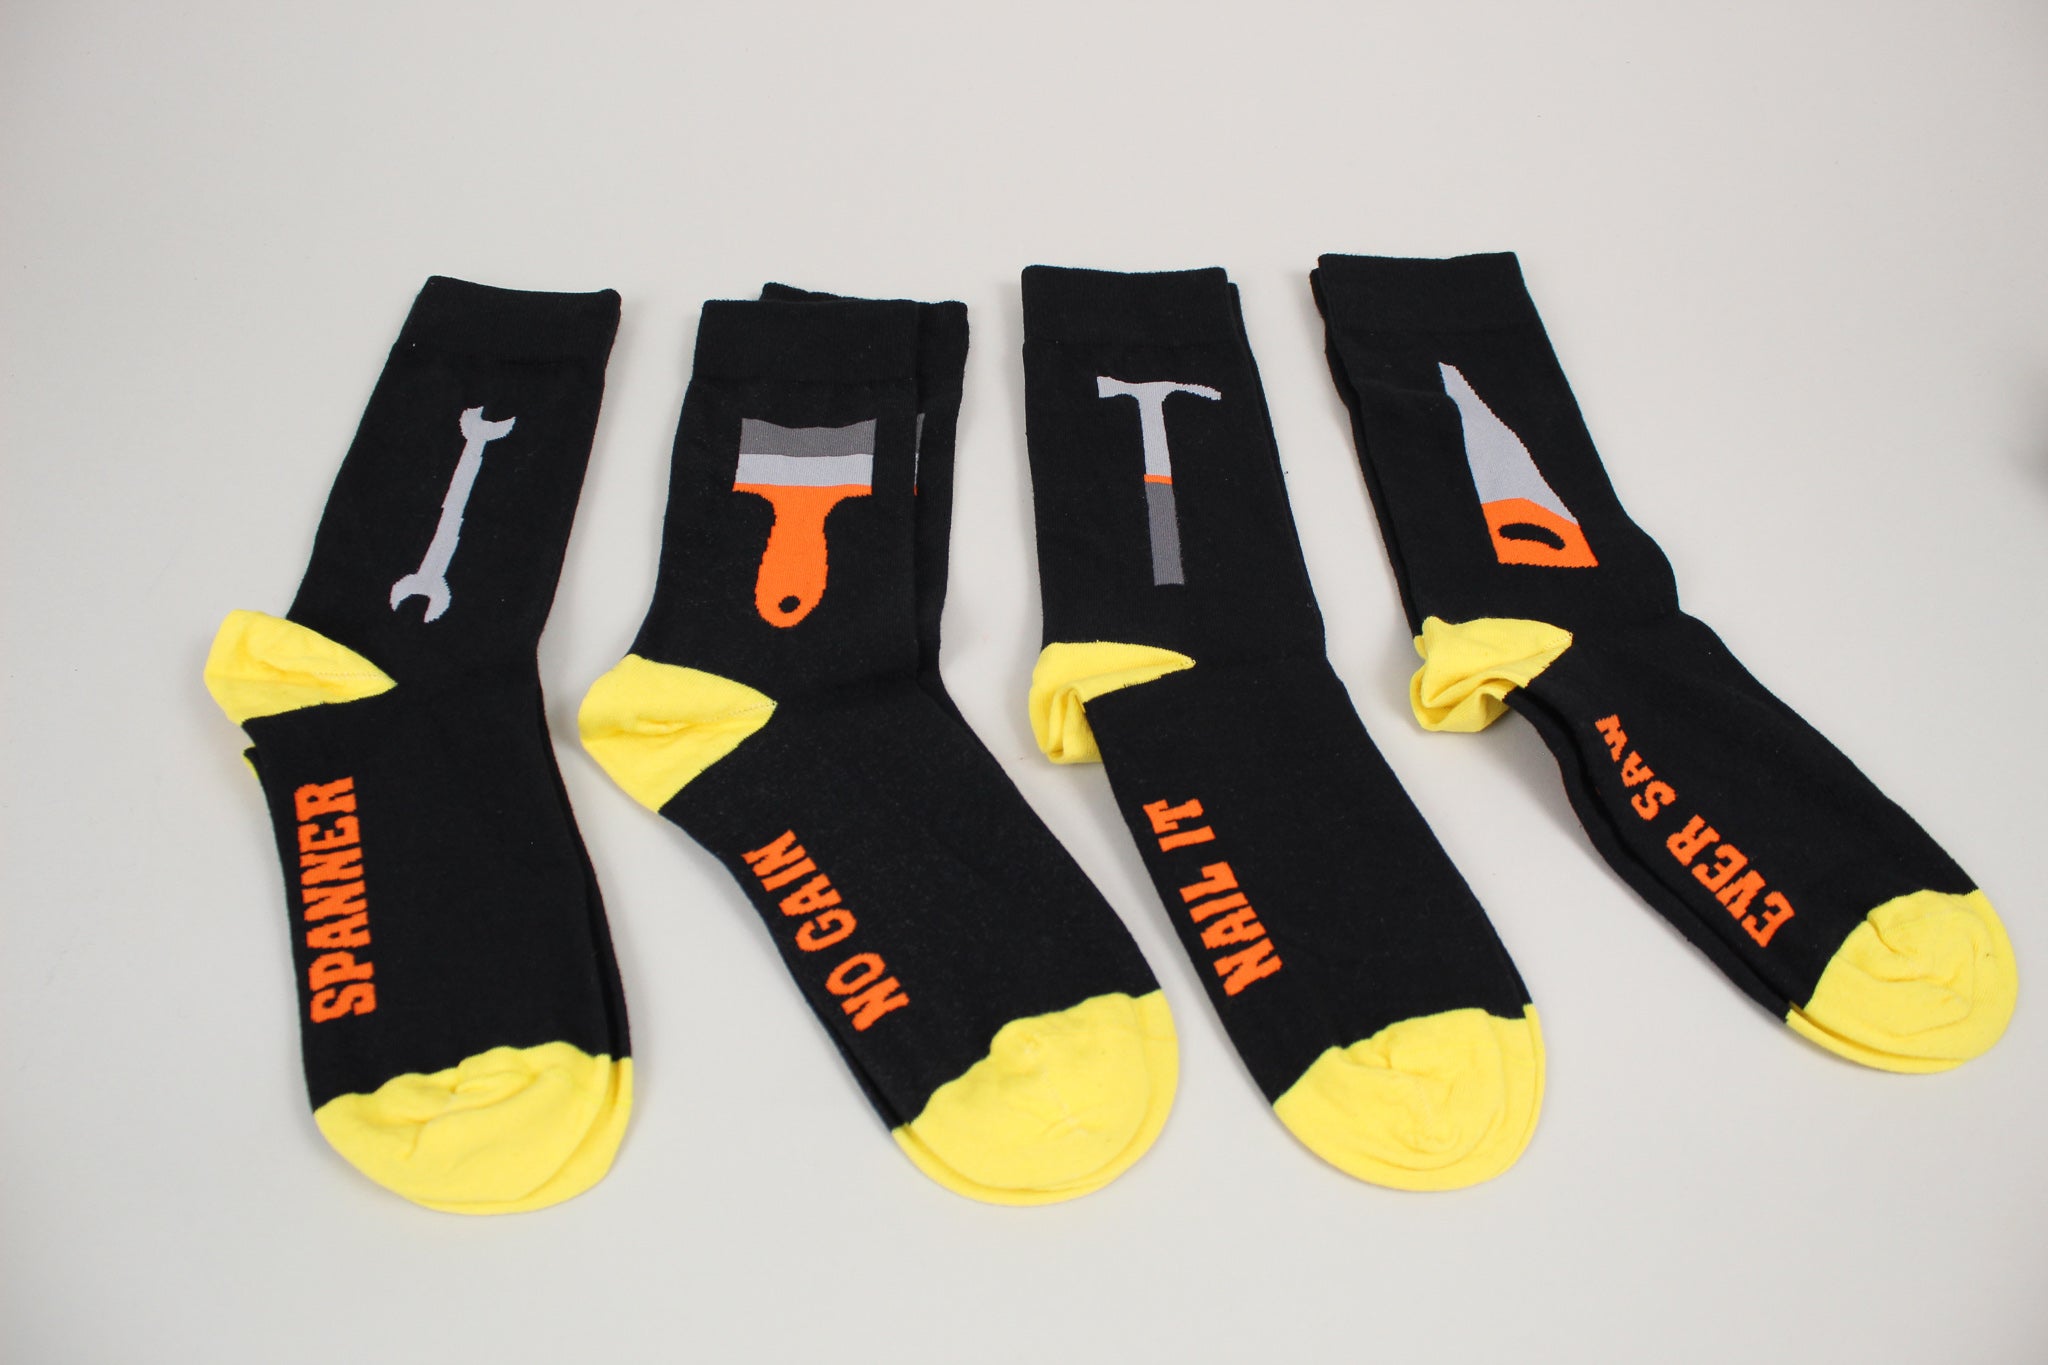 Urban Eccentric Tool Box Socks Gift Set with 4 Pairs